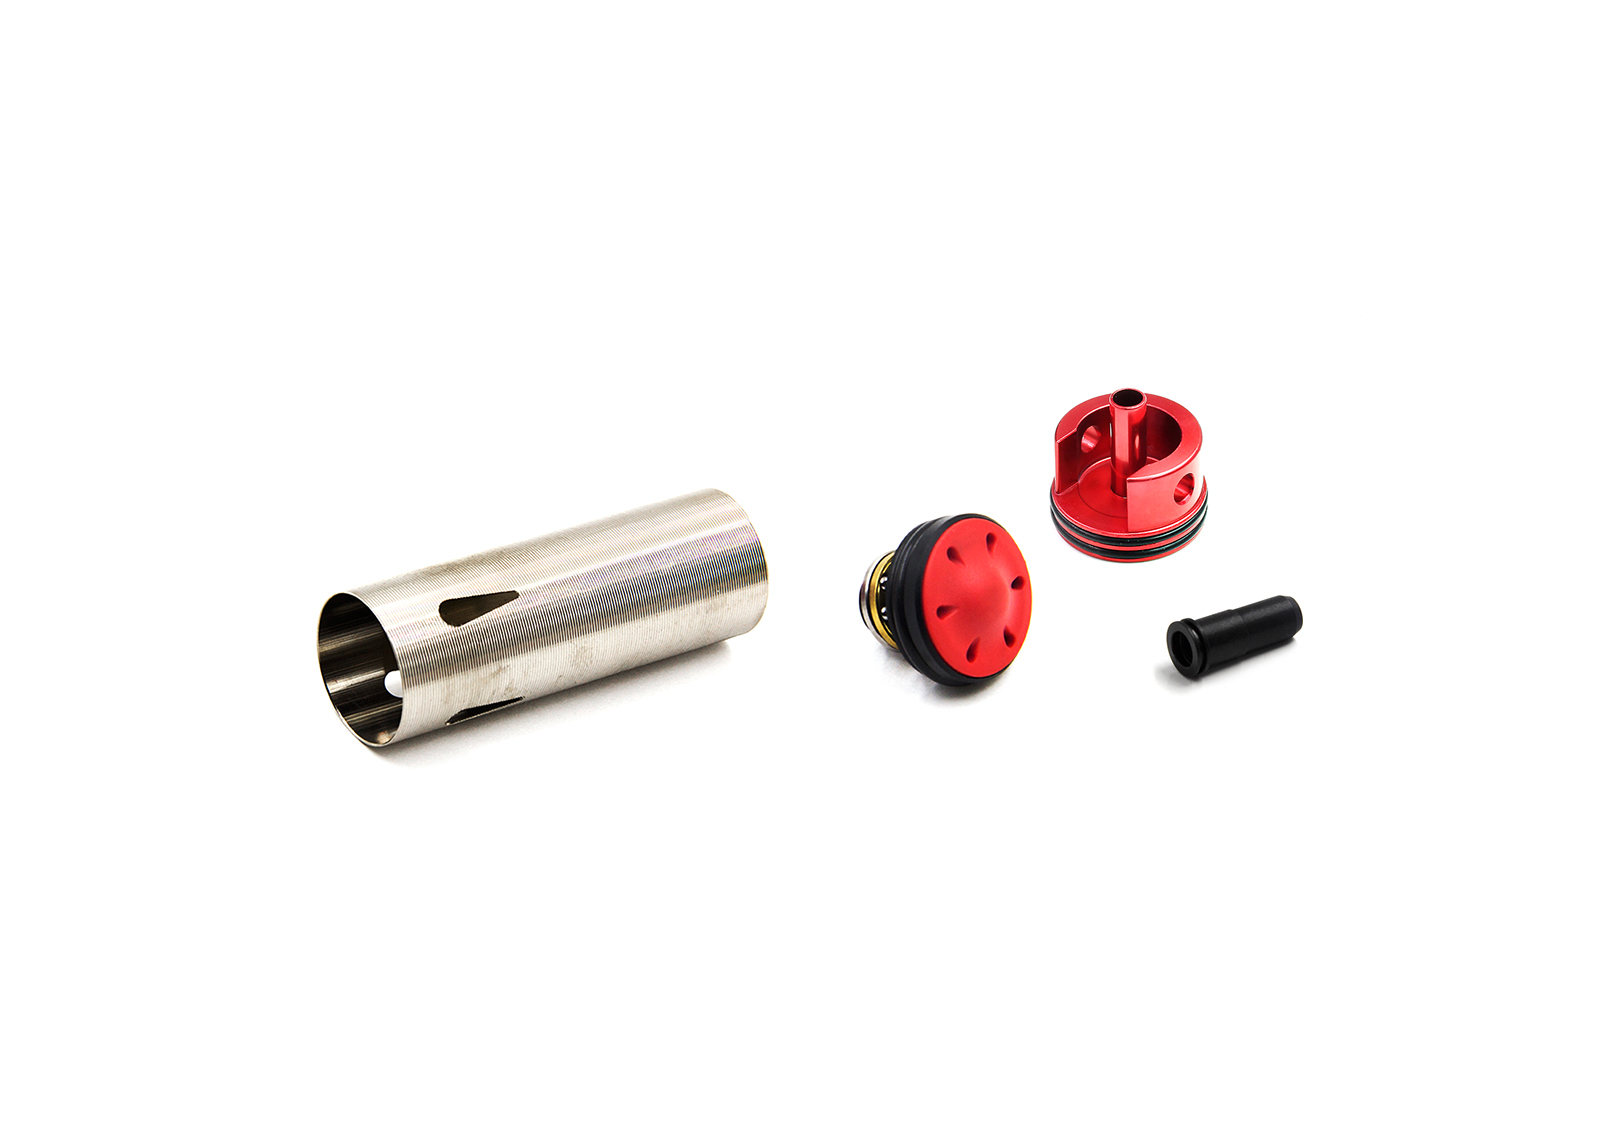 Bore-Up Cylinder Set for M4-A1/RIS/SR16 - Modify Airsoft parts